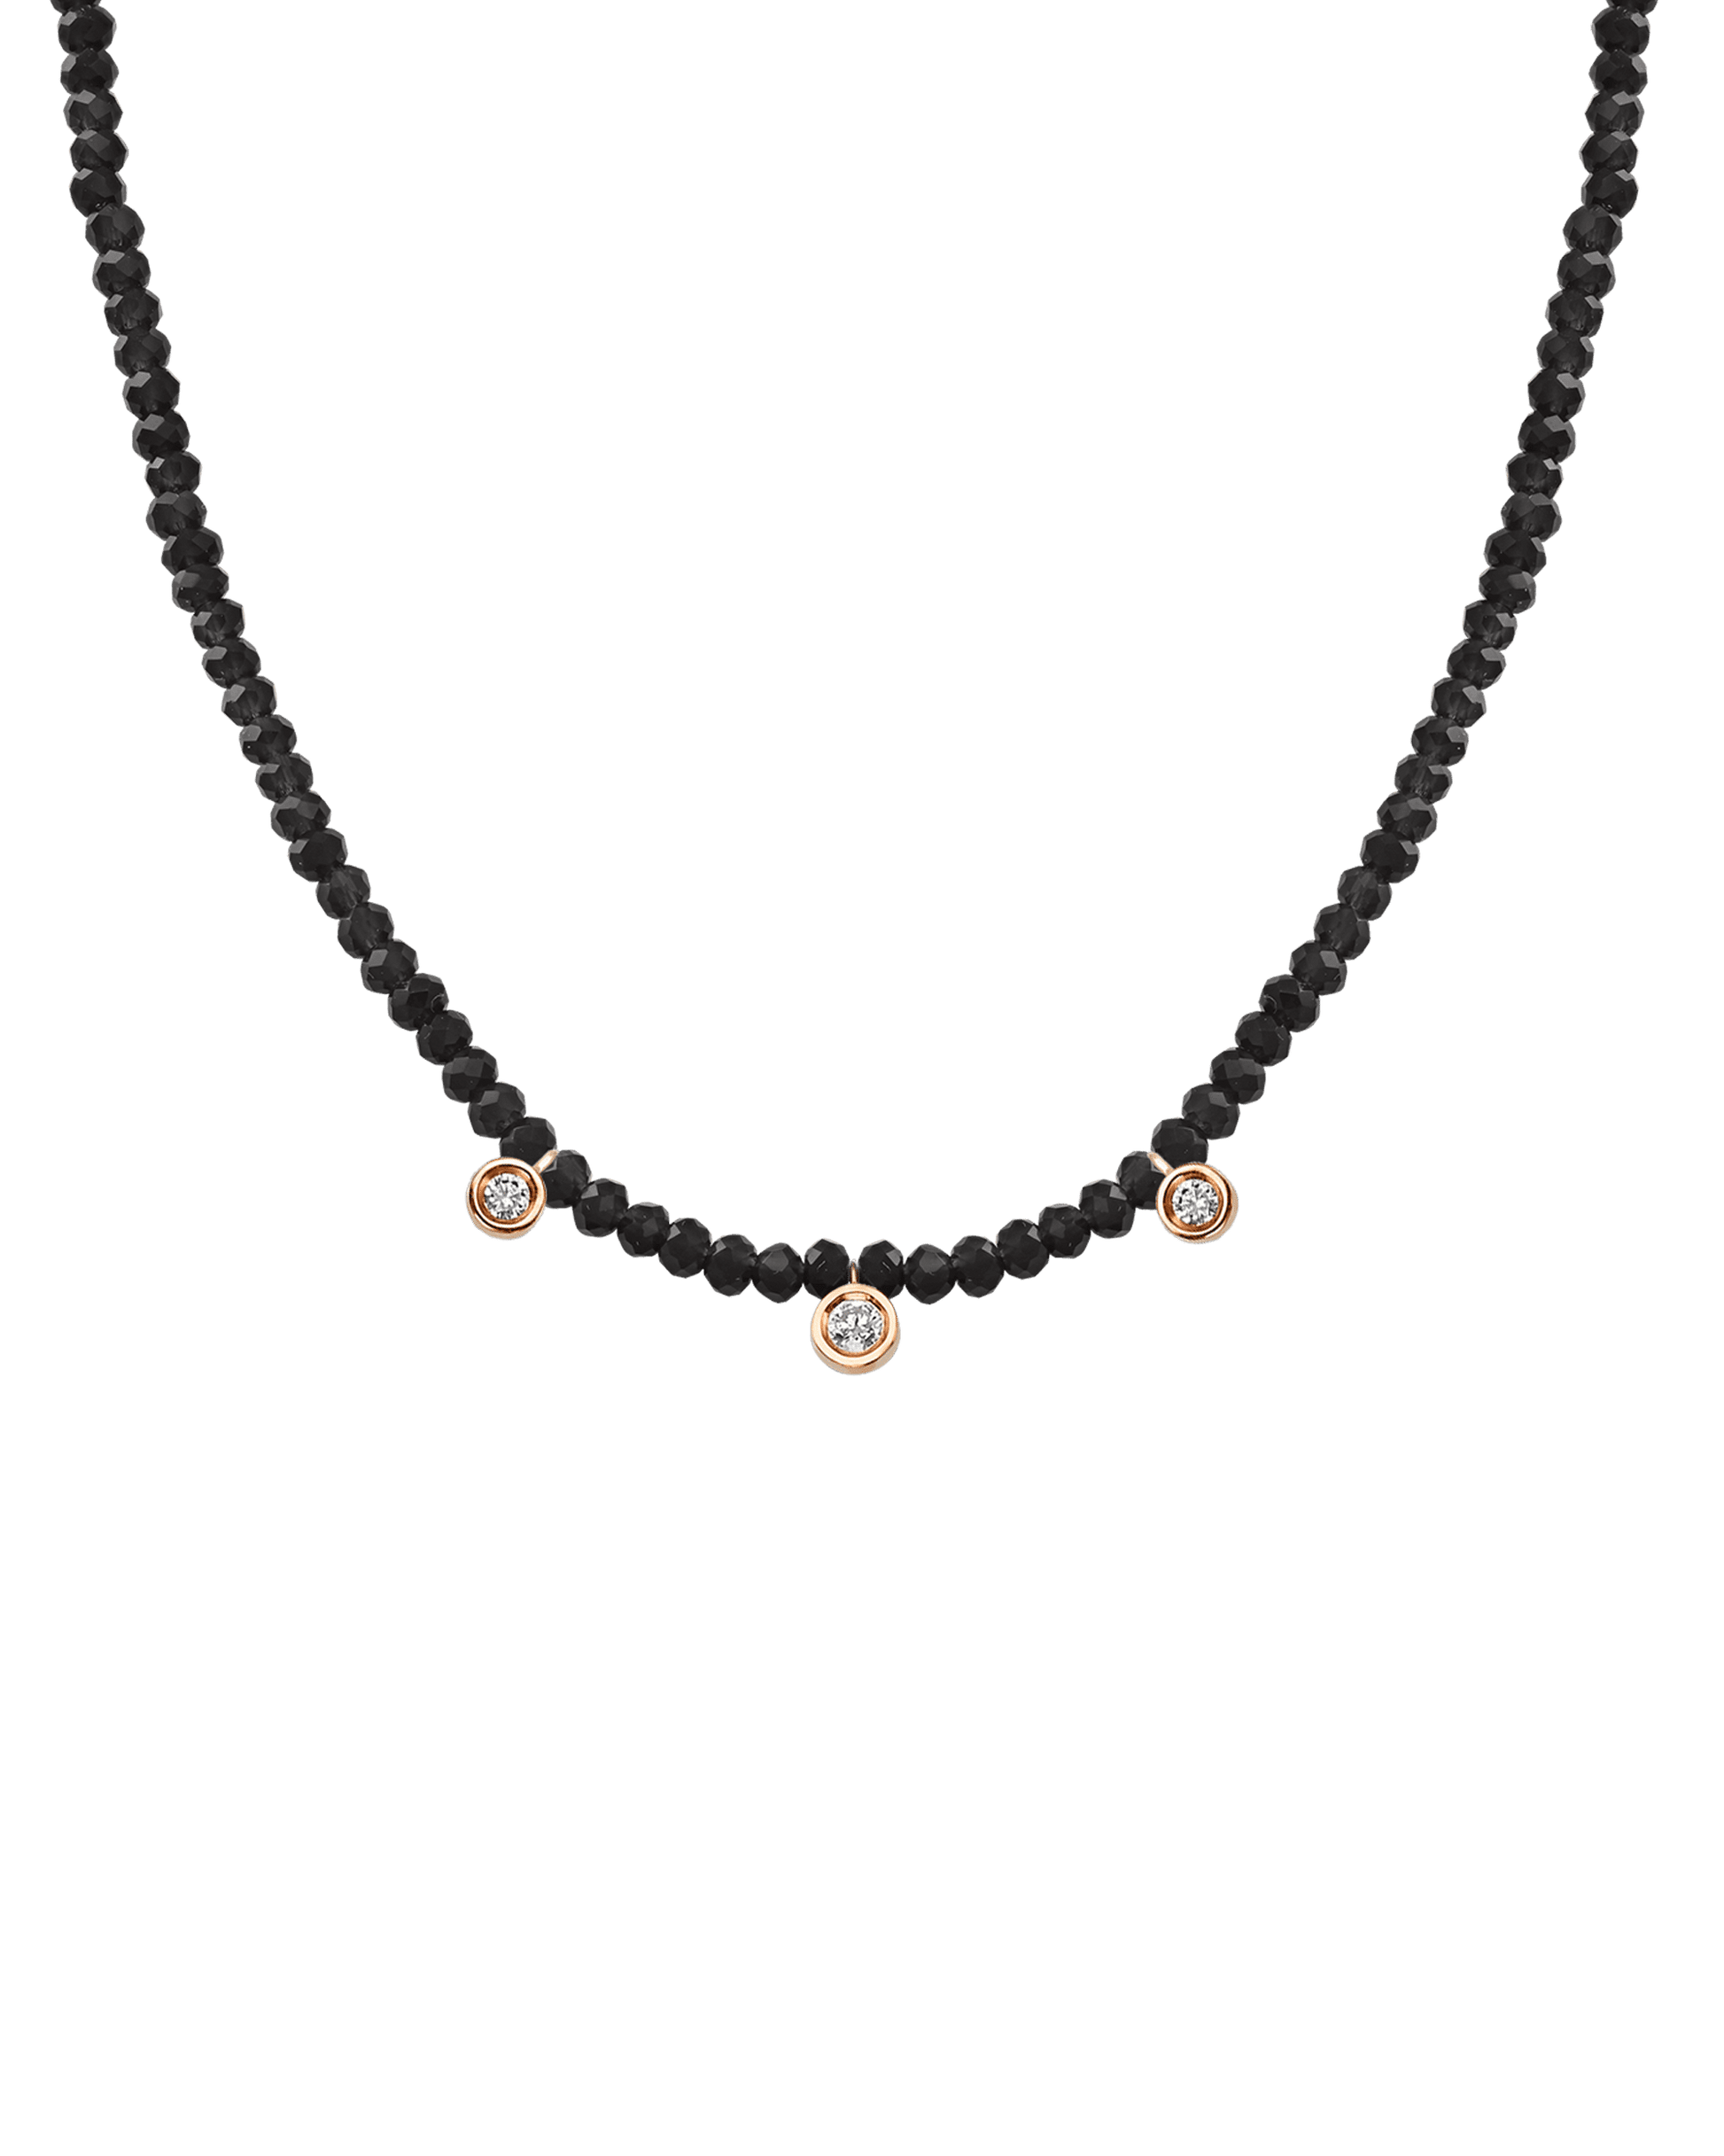 Colliers 3 Diamants & Pierres Précieuses - Or Blanc 14 carats Necklaces magal-dev 